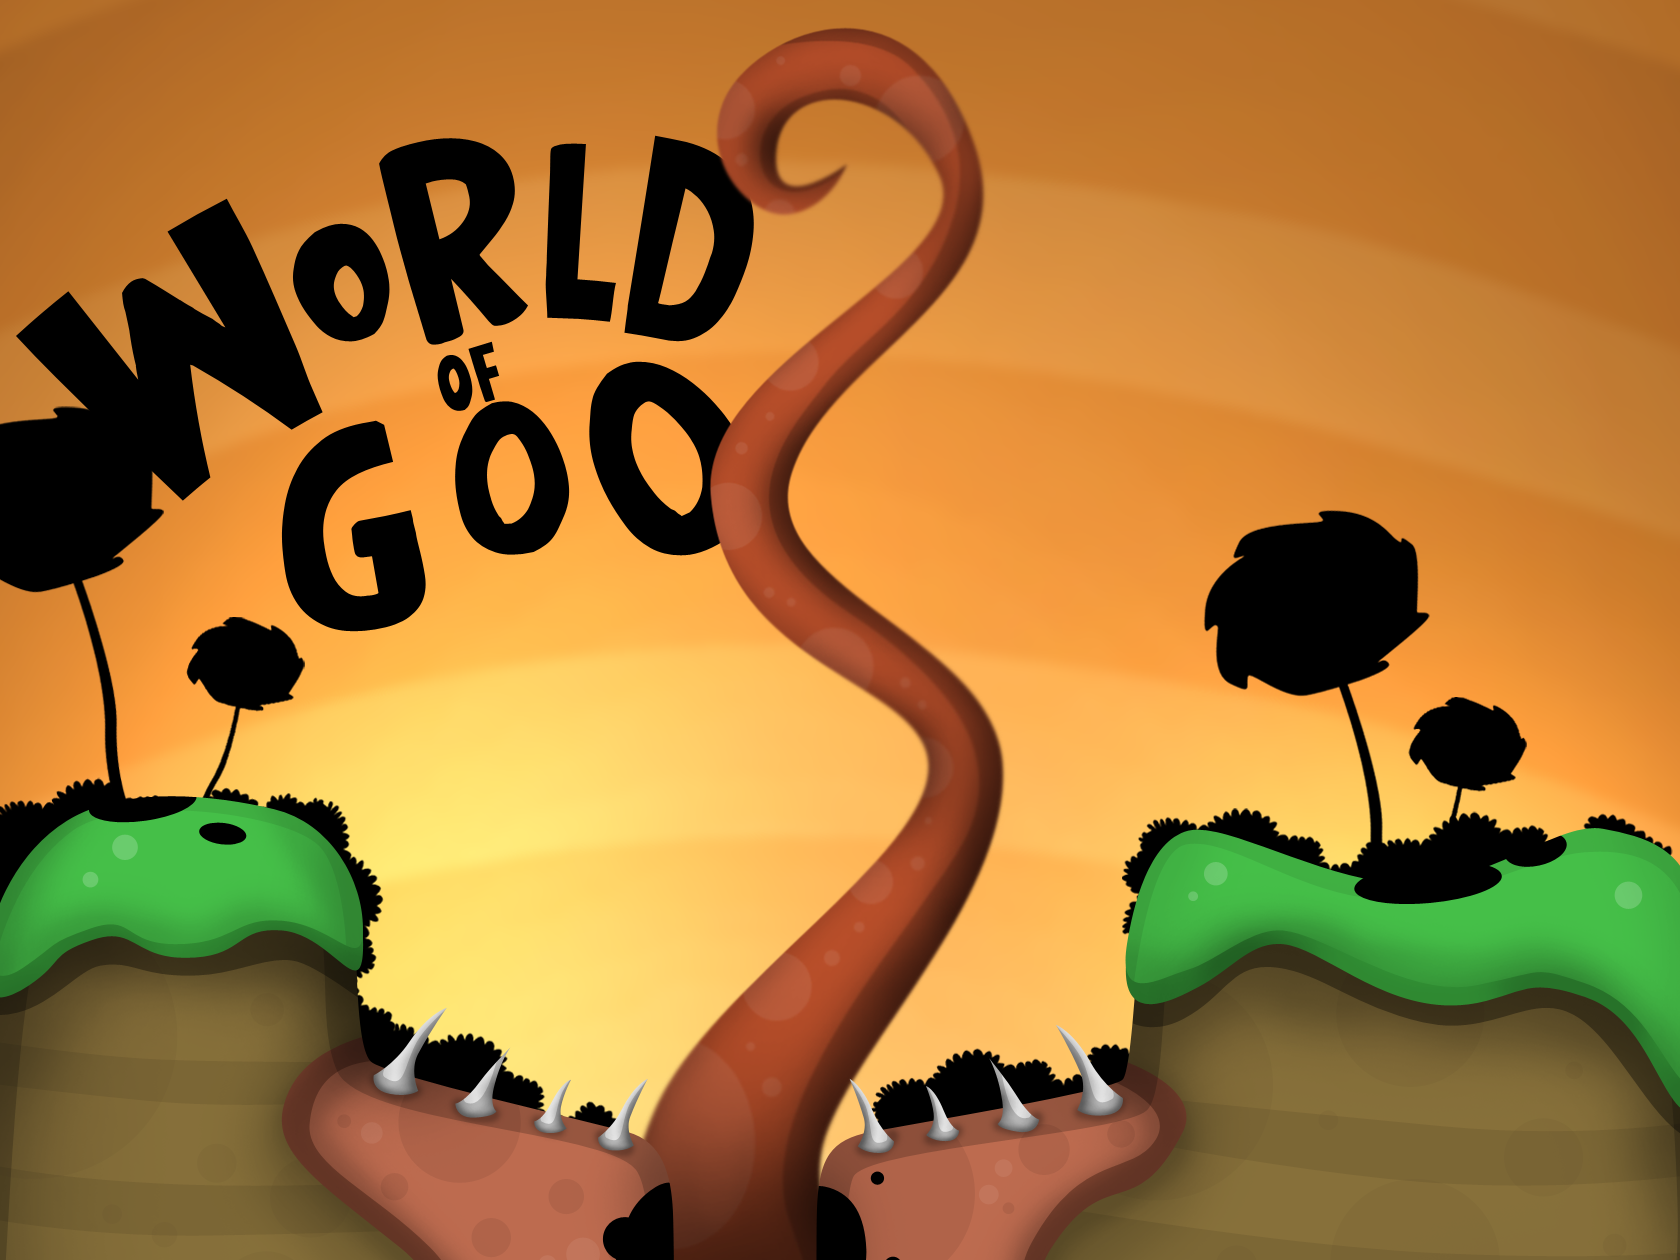 the world of goo